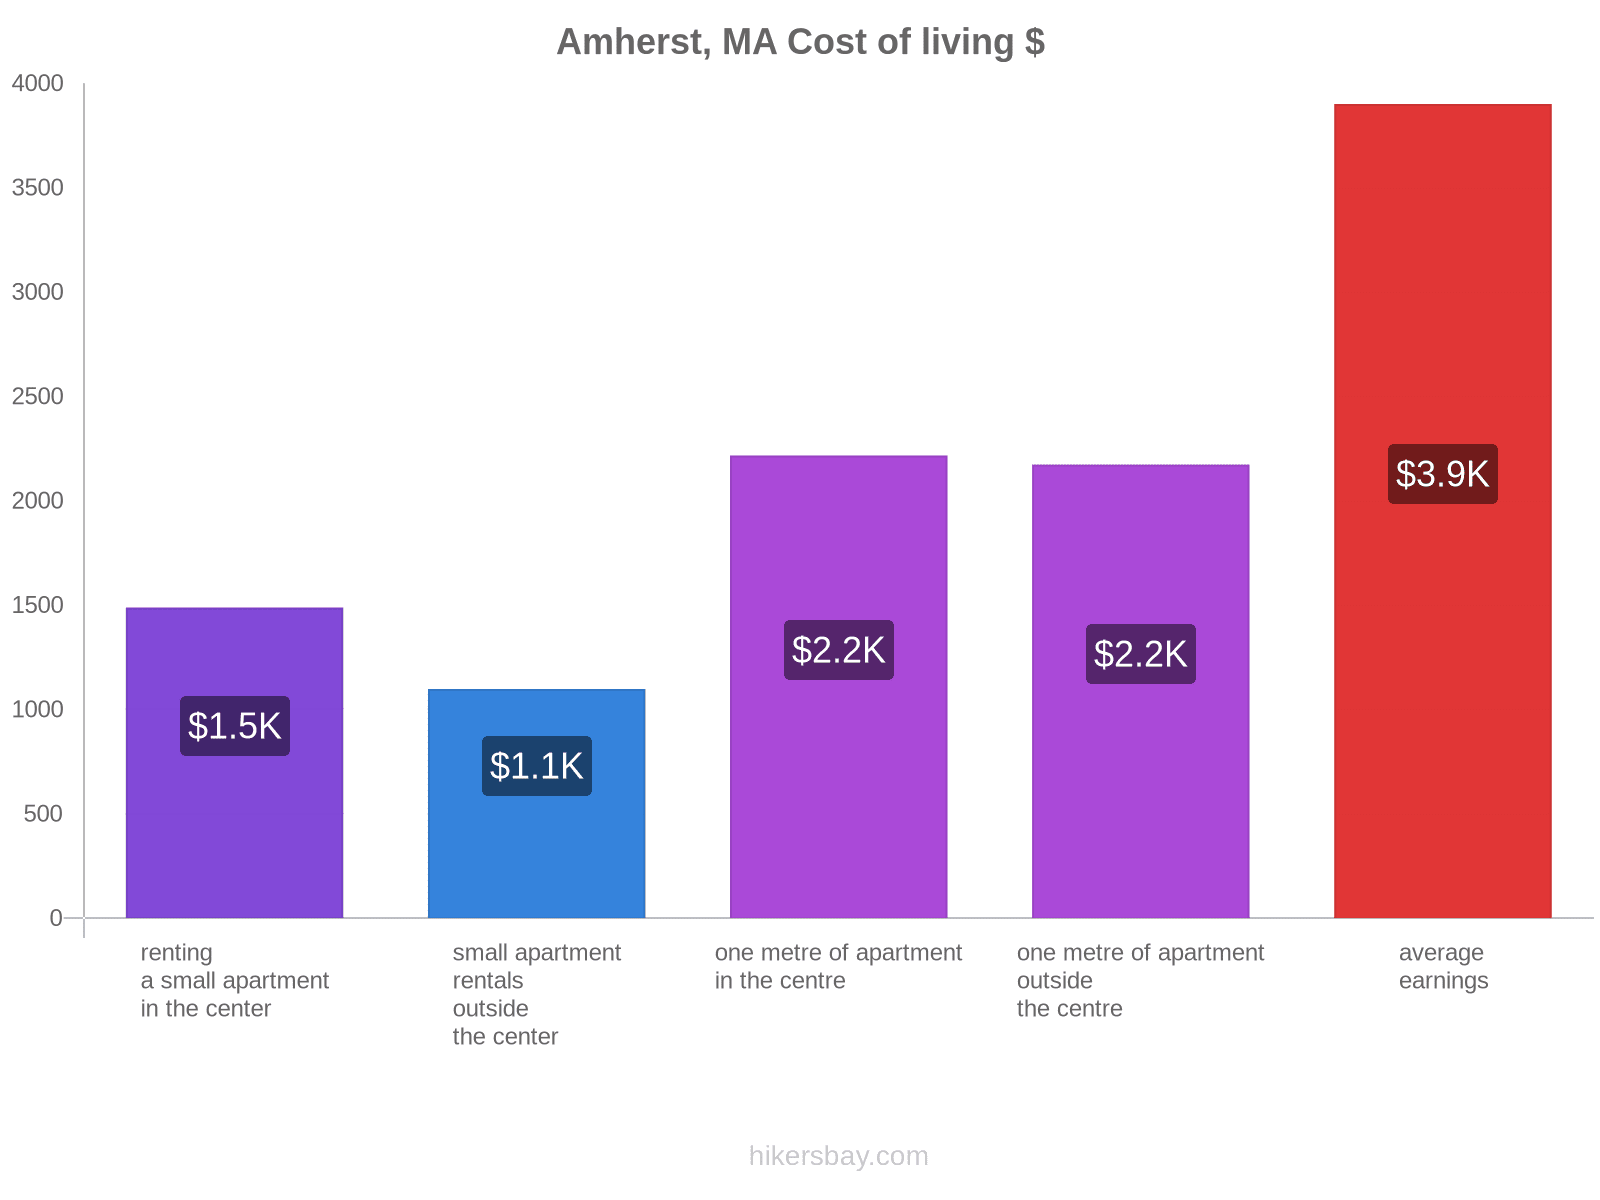 Amherst, MA cost of living hikersbay.com